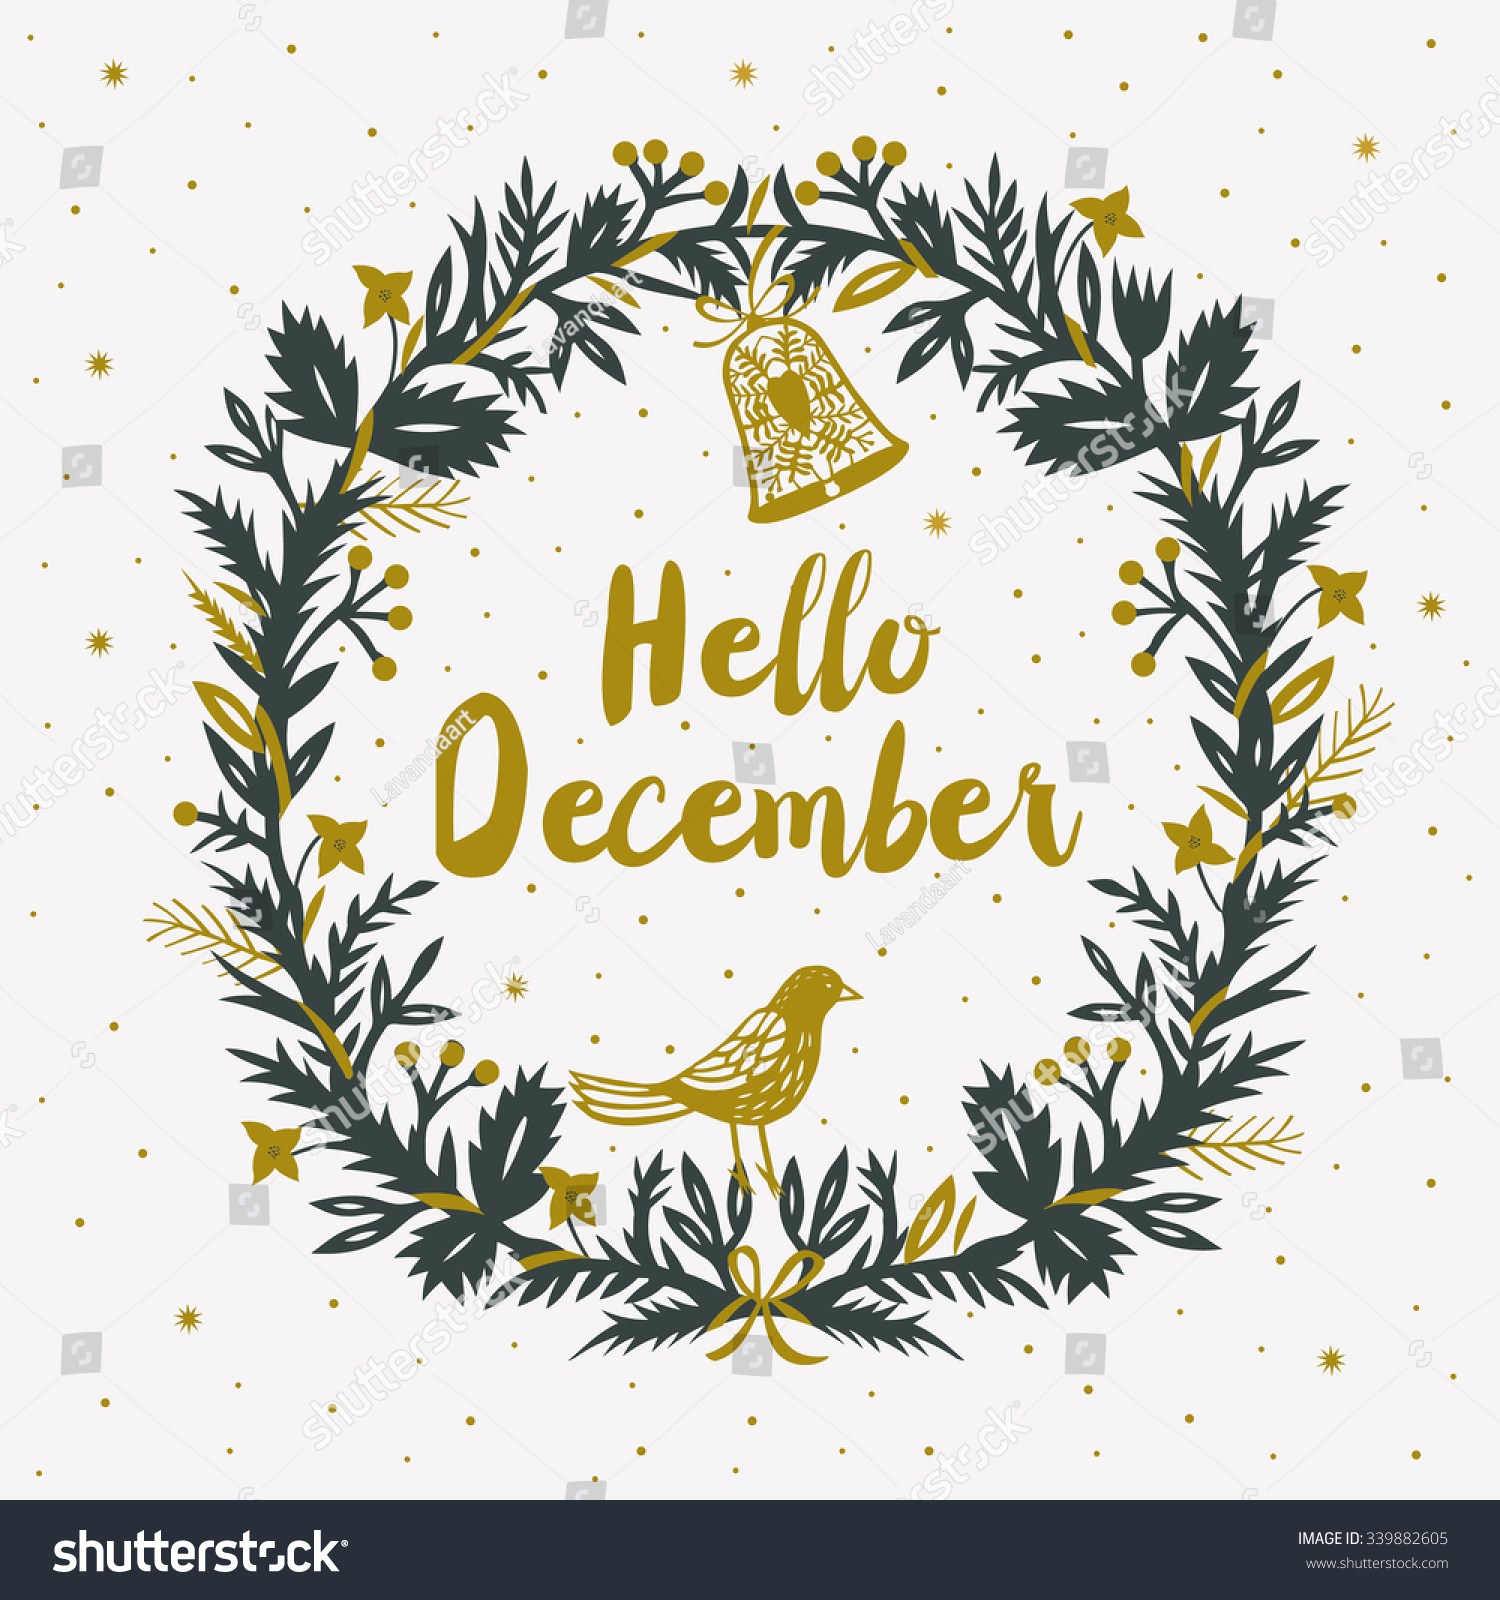 december clipart hello december